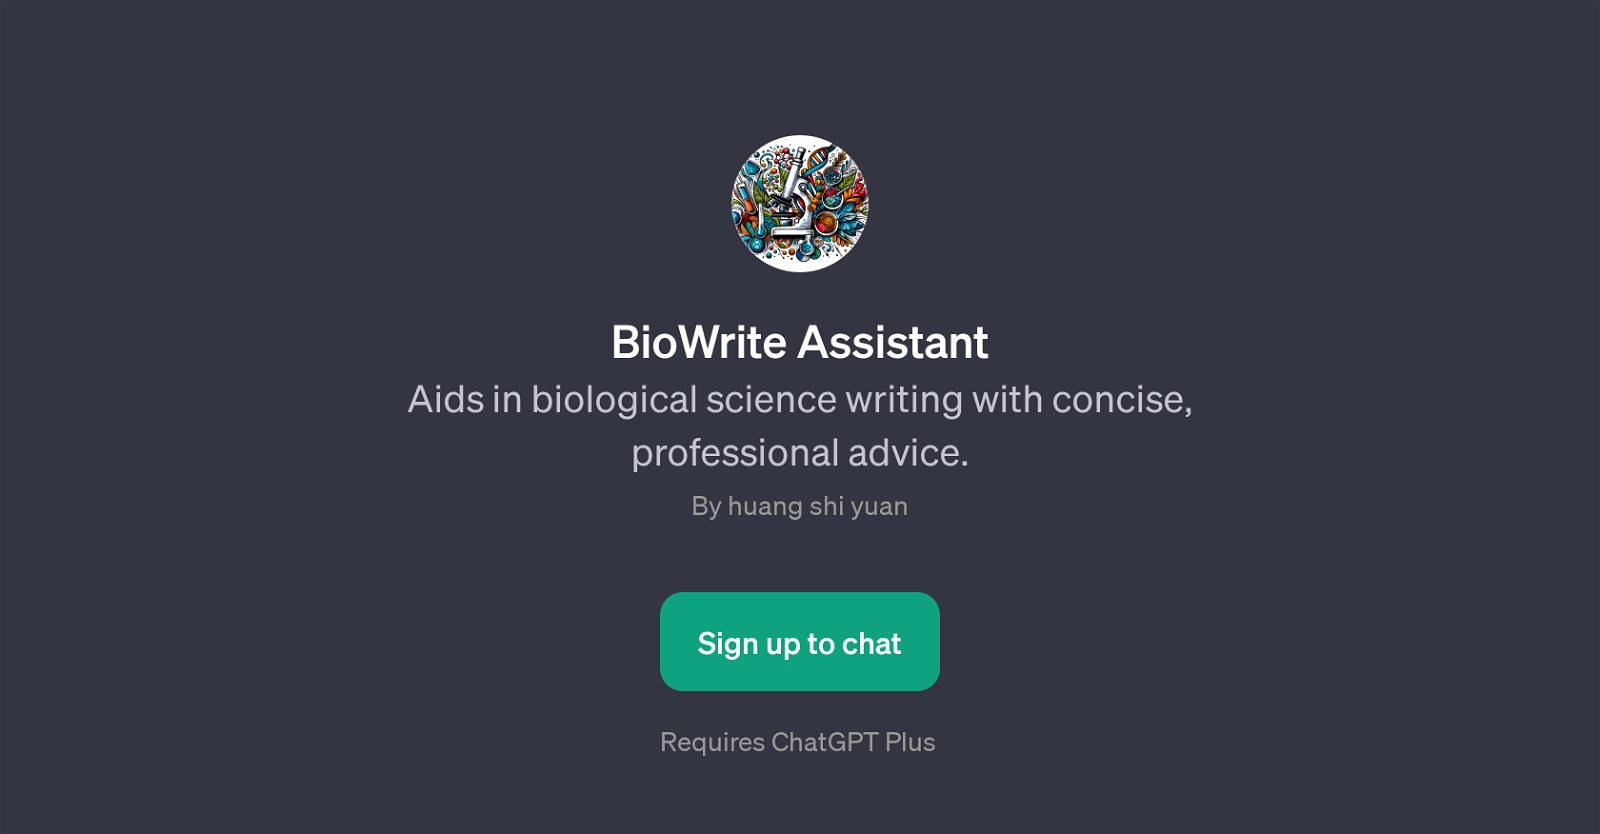 BioWrite Assistant website